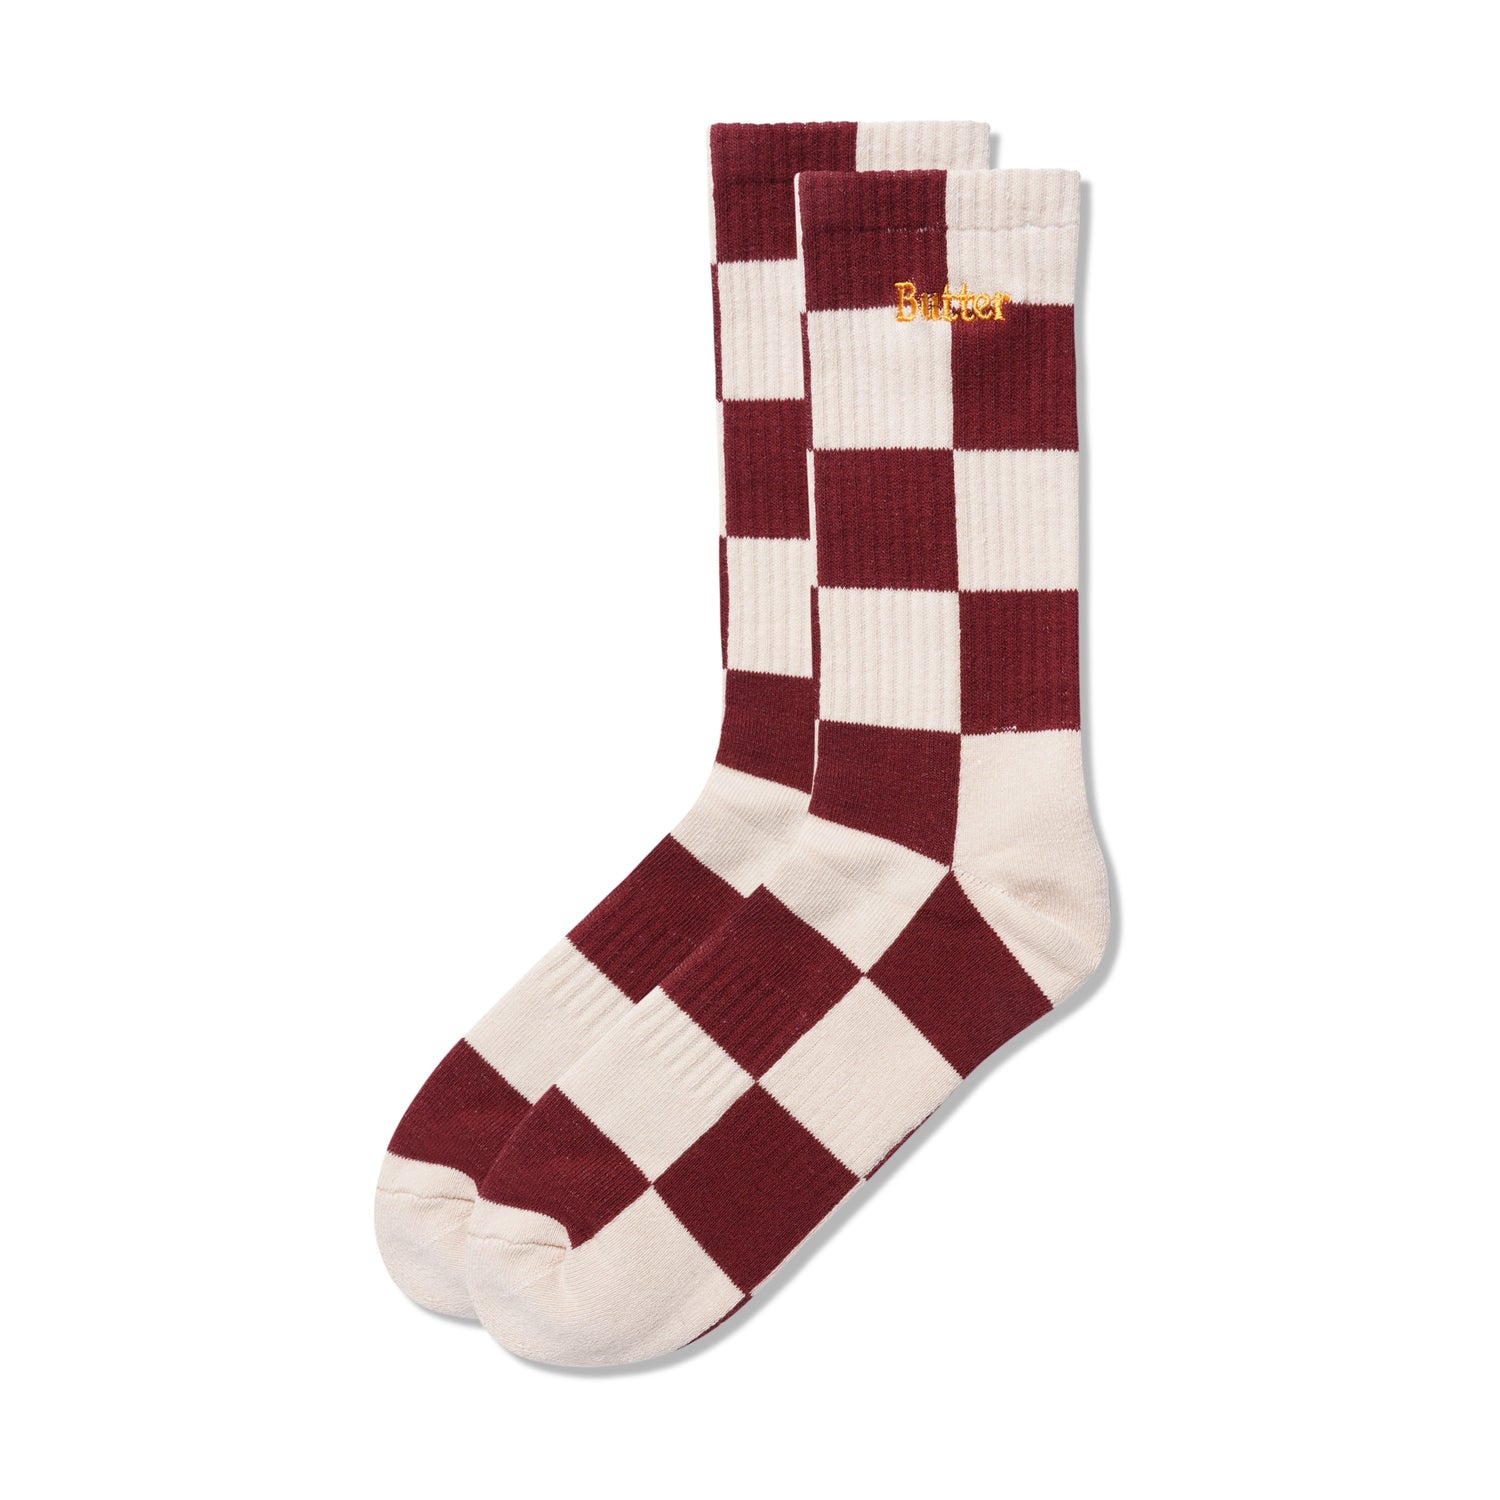 Checkered Socks, Cream / Burgundy